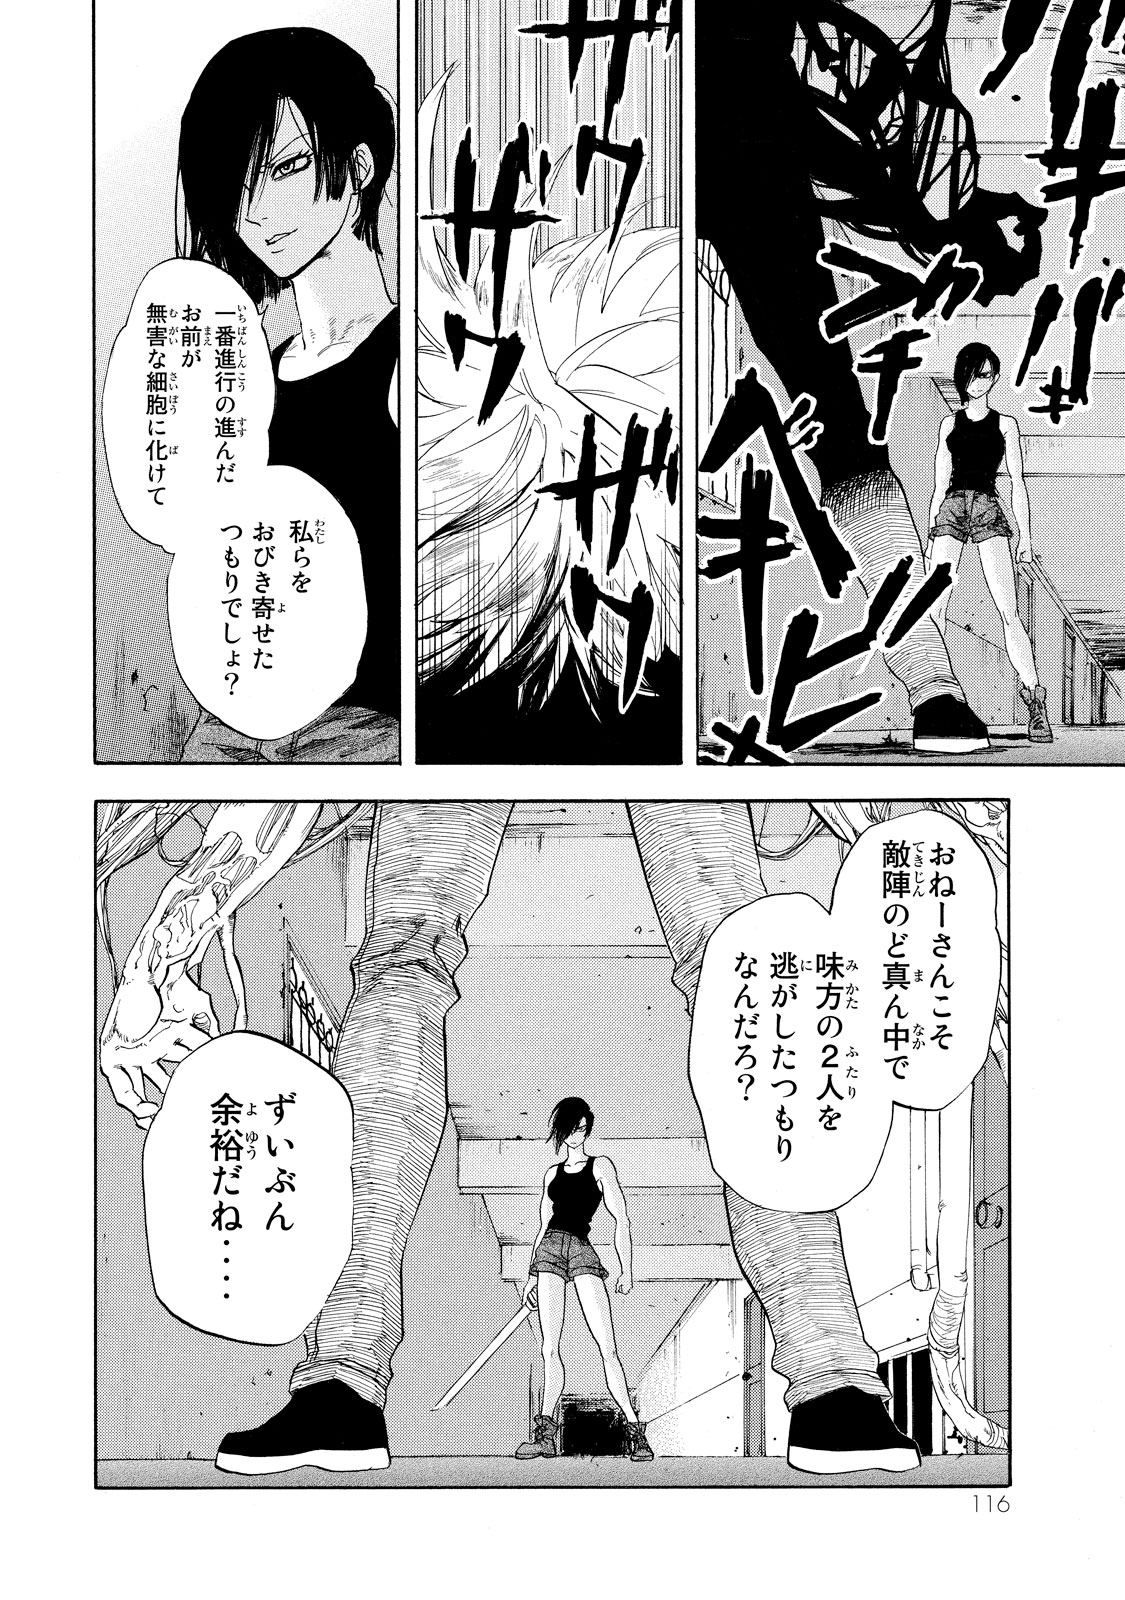 Hataraku Saibou - Chapter 8 - Page 22